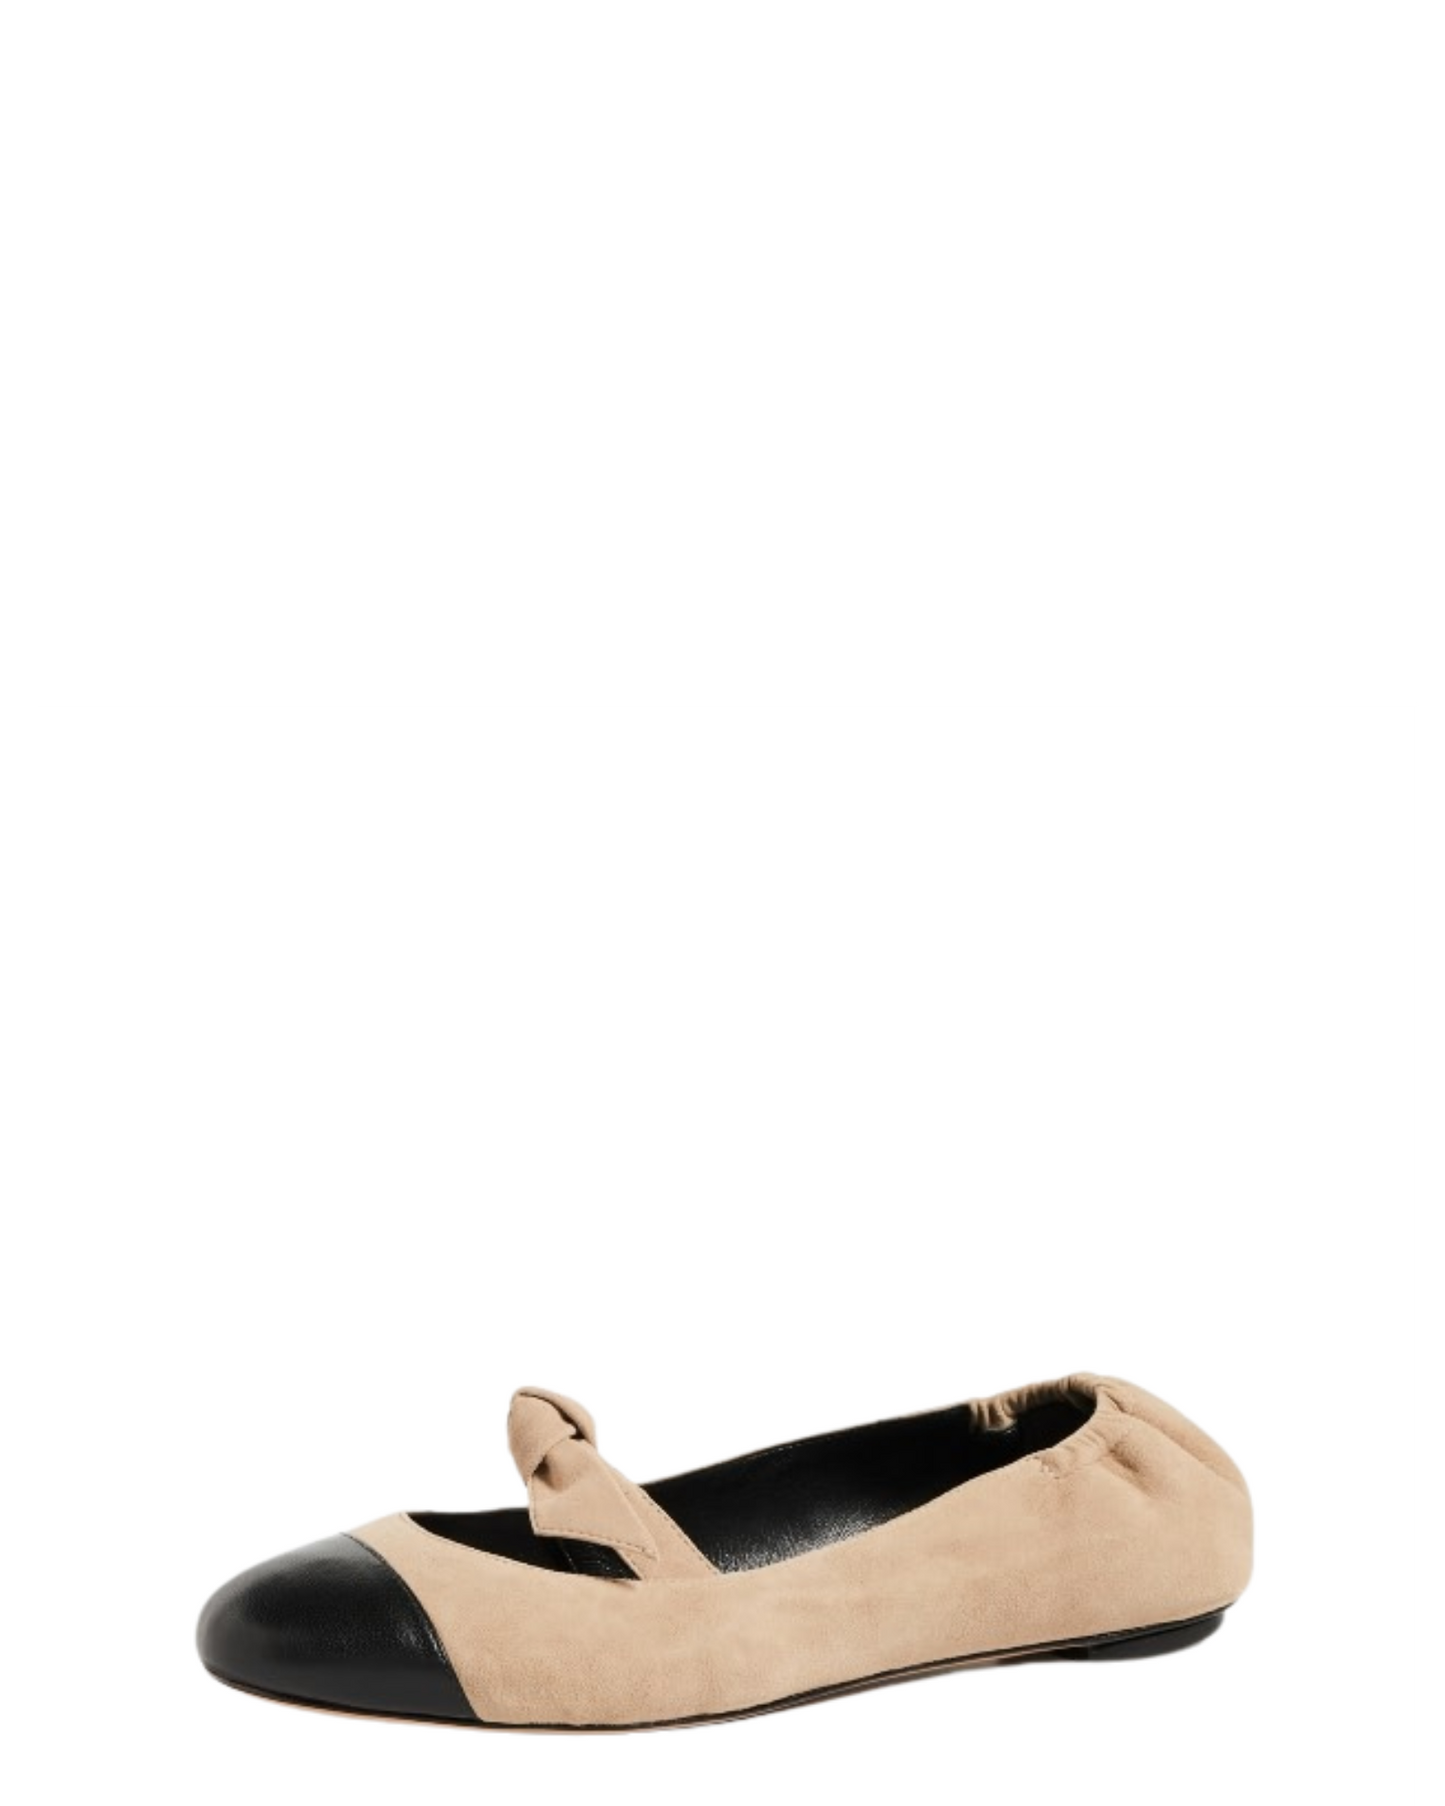 Clarita Ballet Flat